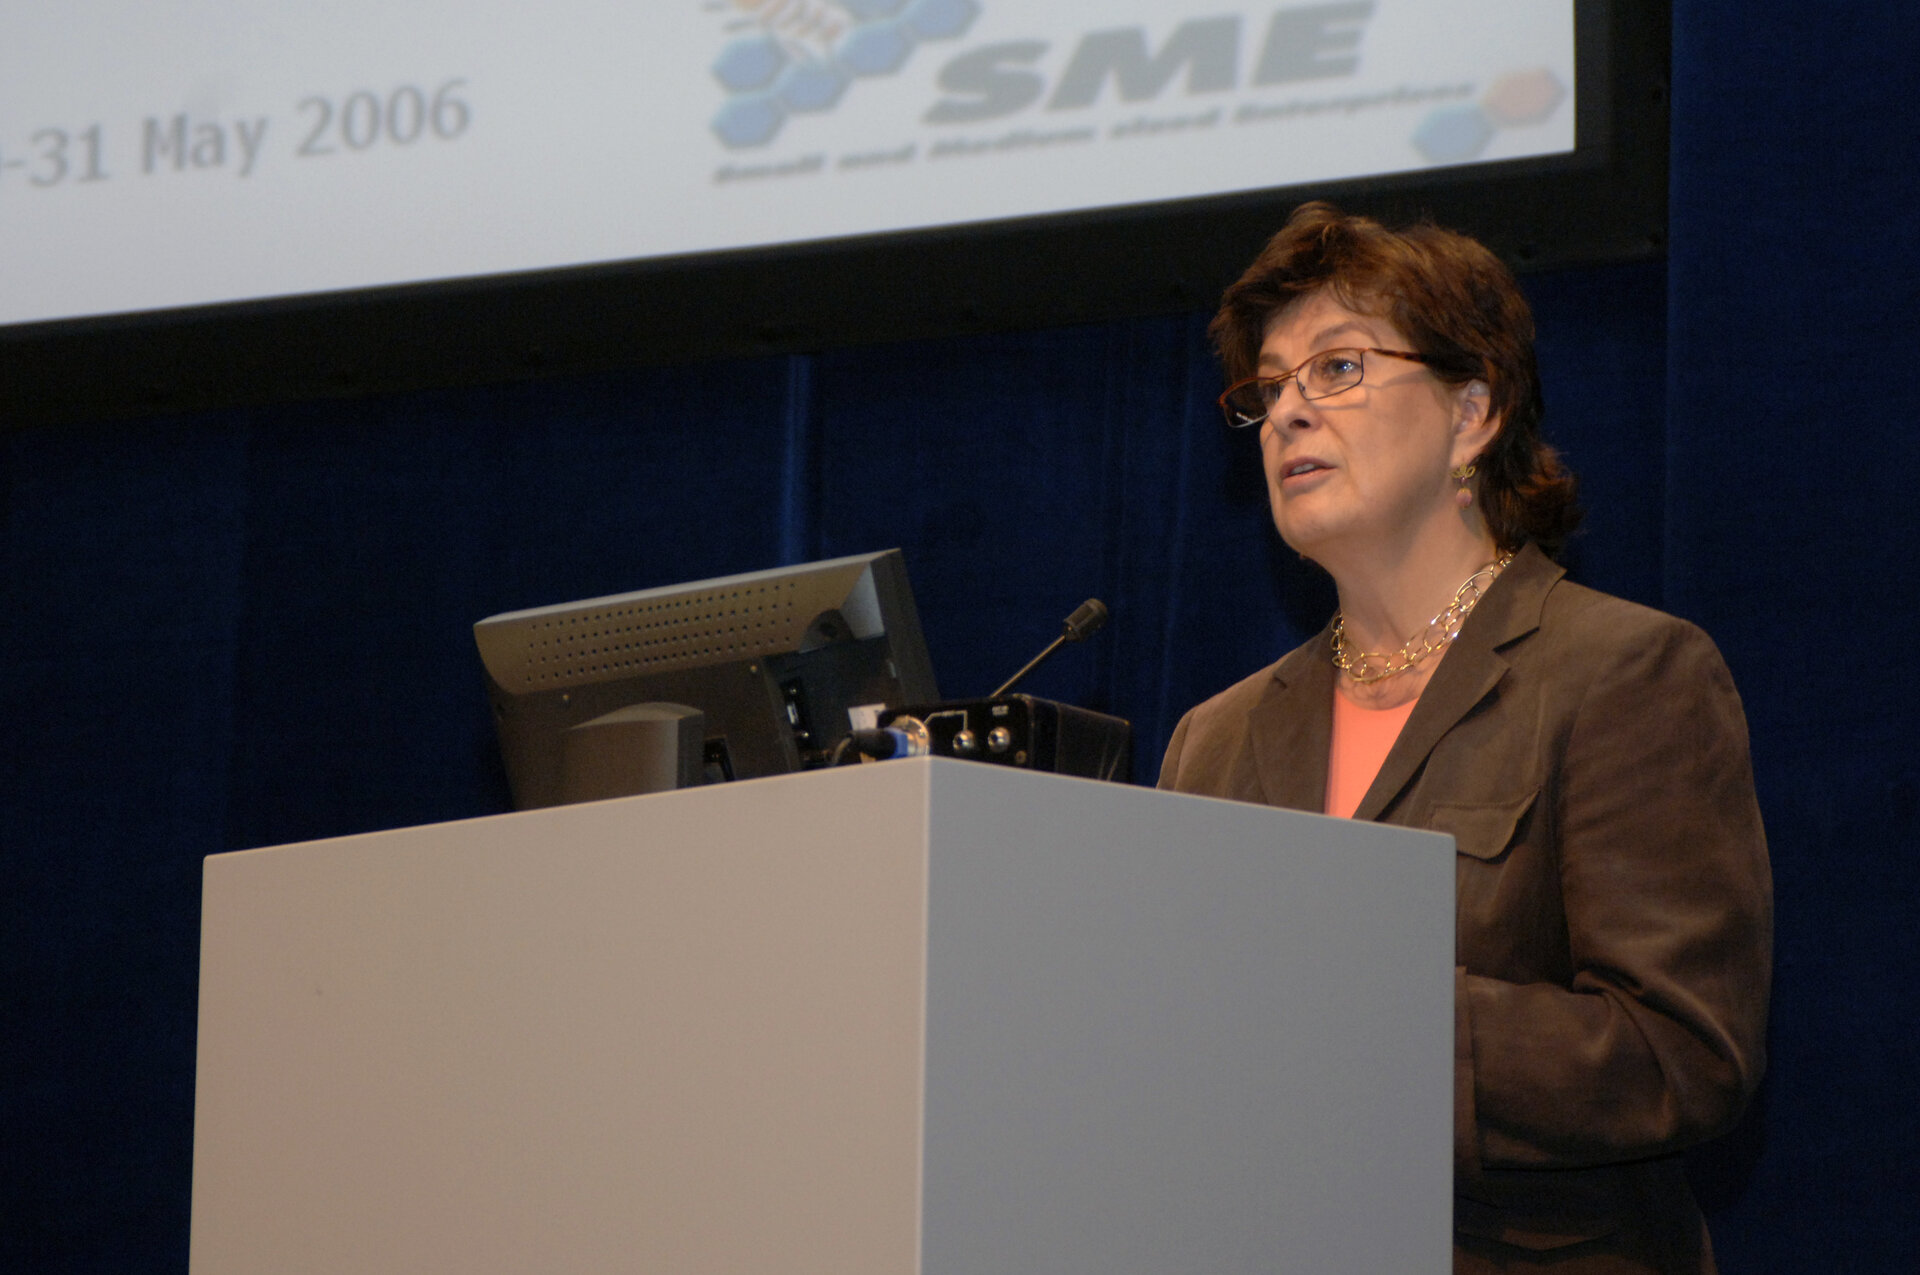 Françoise Le Bail, EC Deputy DG for Enterprise and Industry